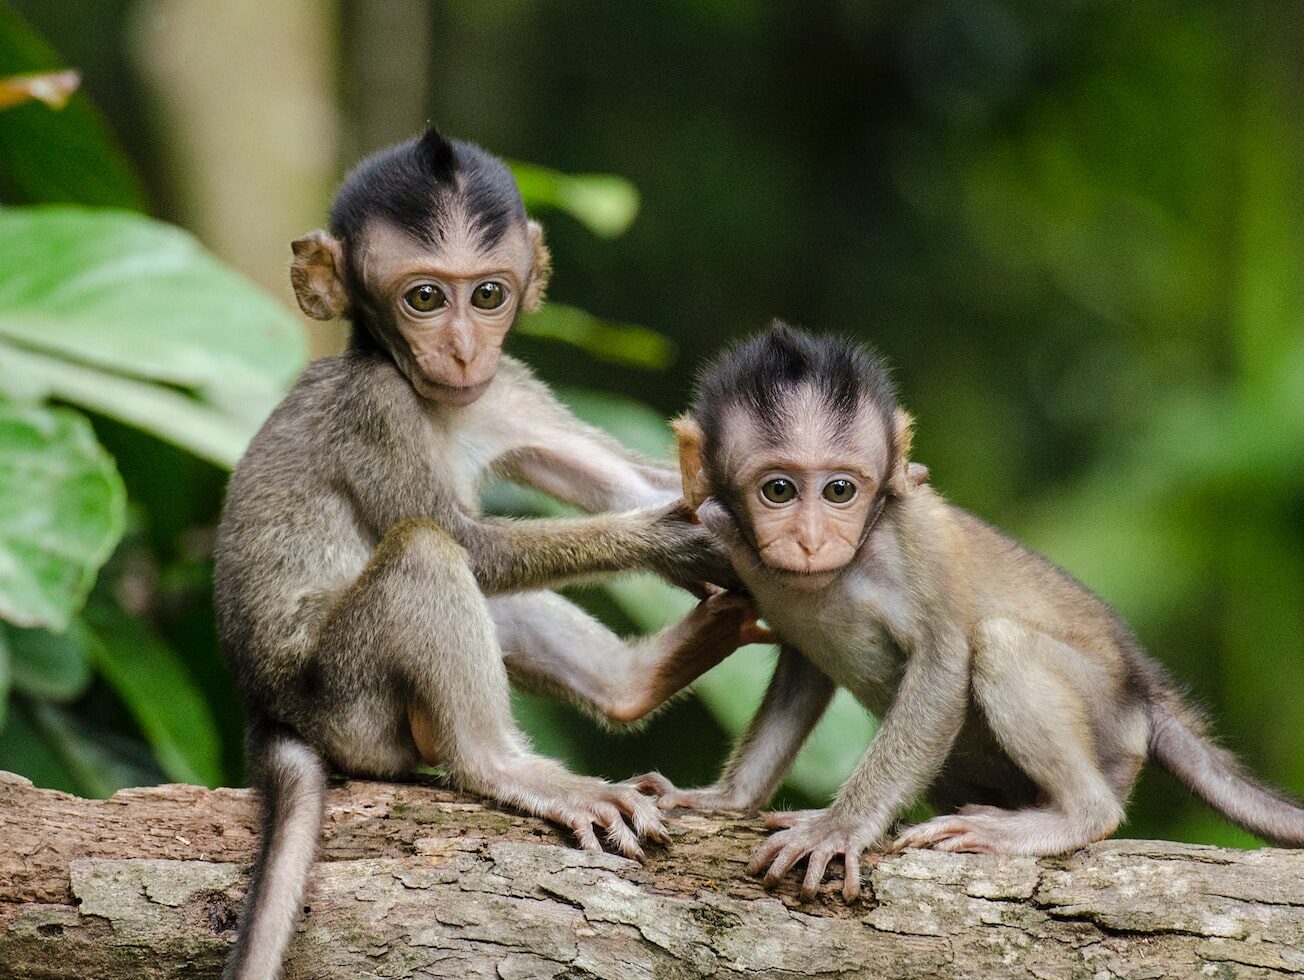 two baby monkeys on gray tree branch